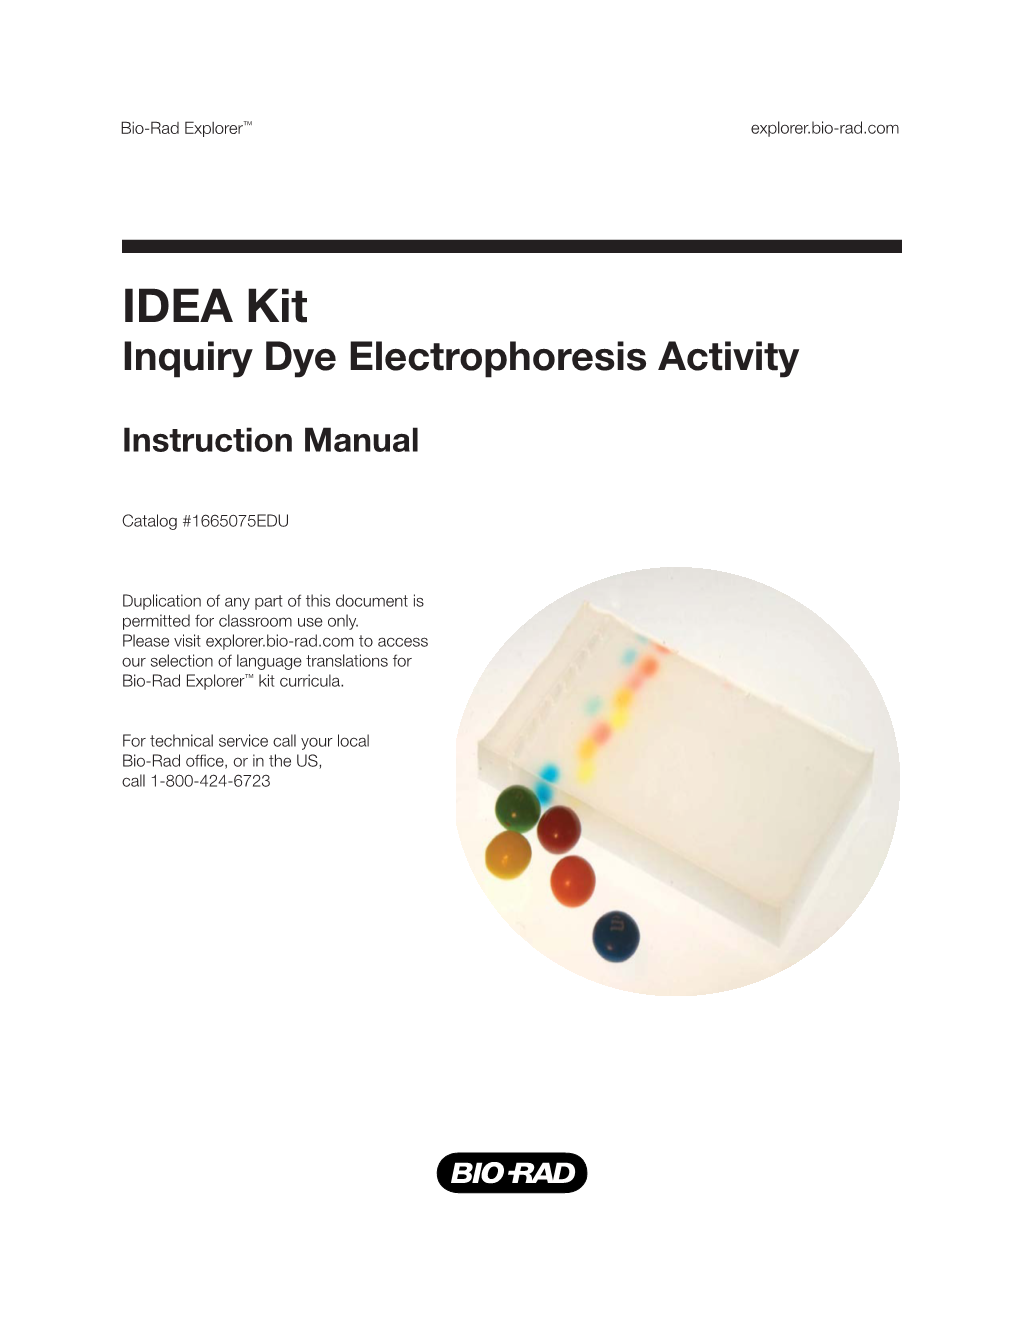 IDEA Kit Inquiry Dye Electrophoresis Activity